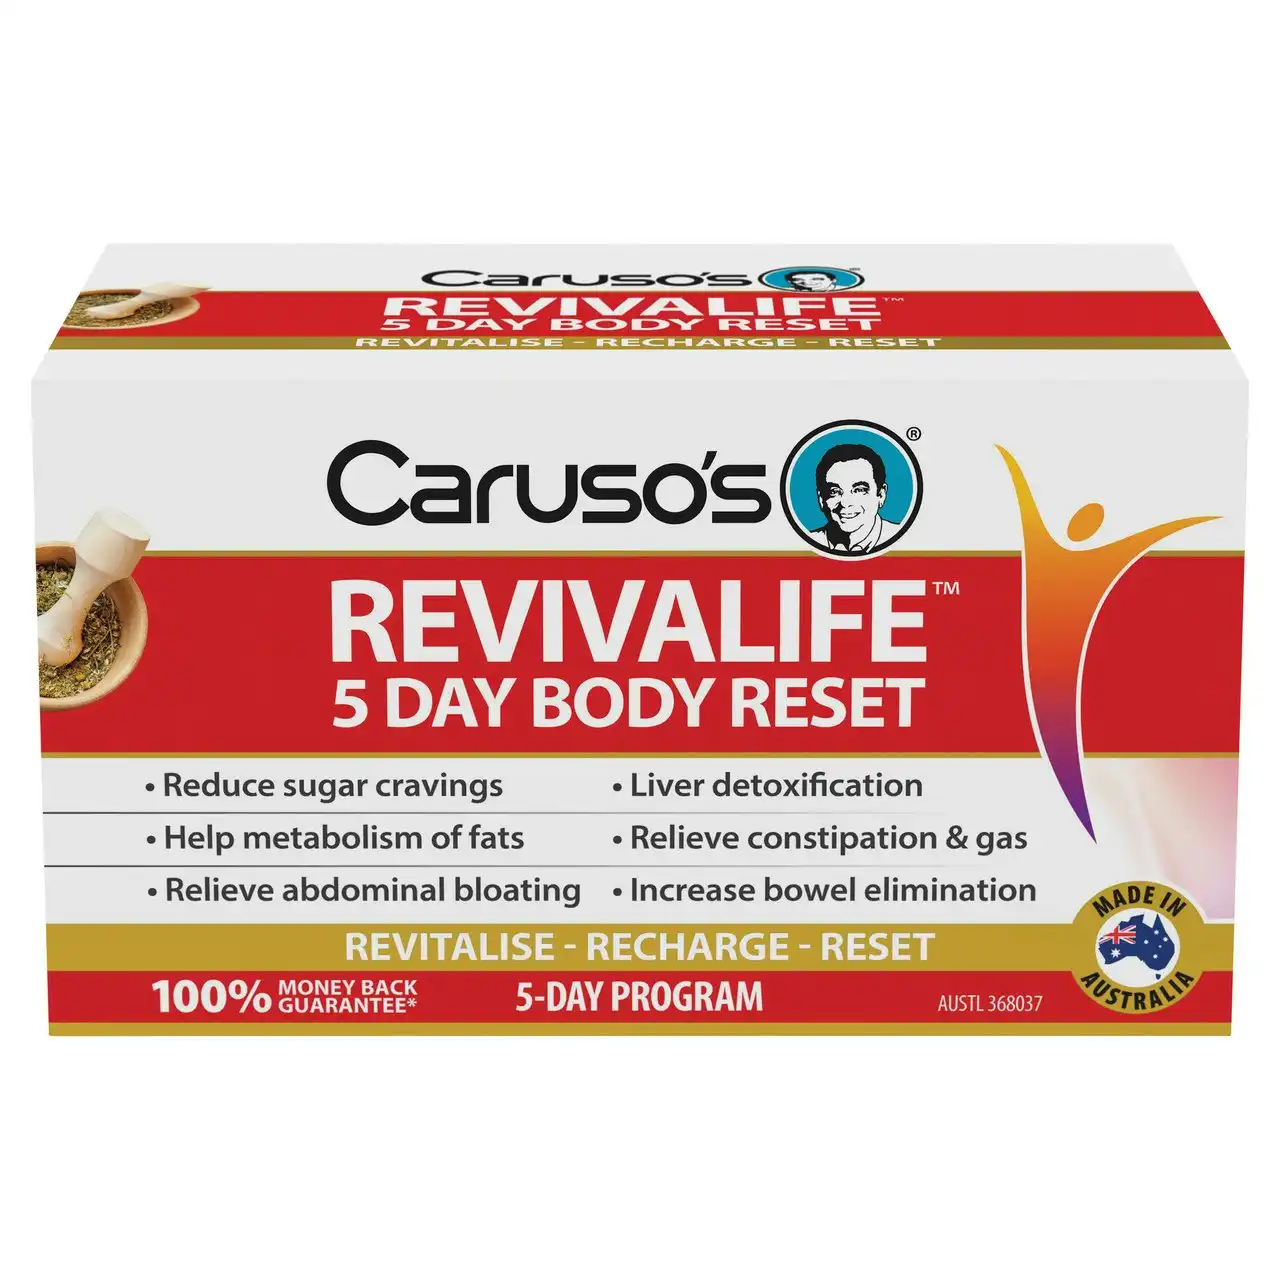 Caruso's Revivalife 5 Day Body Reset